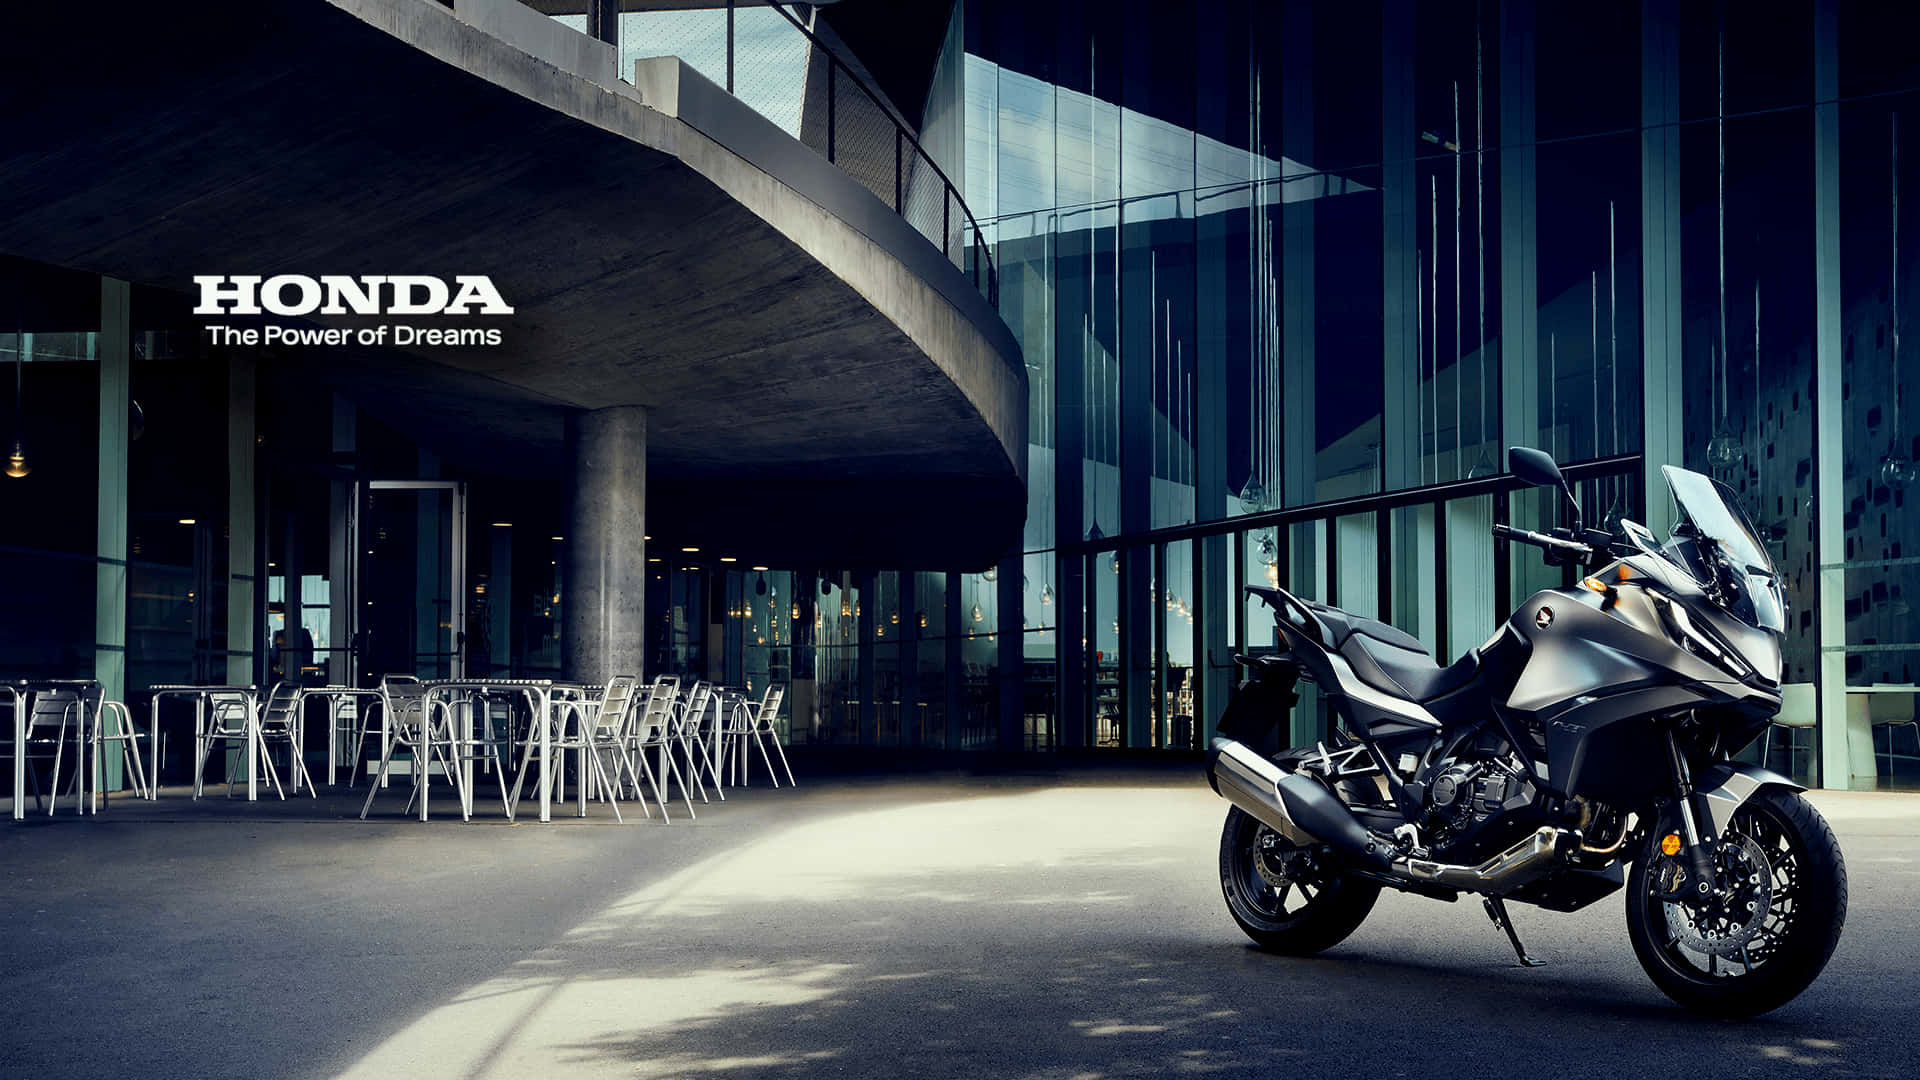 The Ultimate Ride - Honda Motorcycle Wallpaper